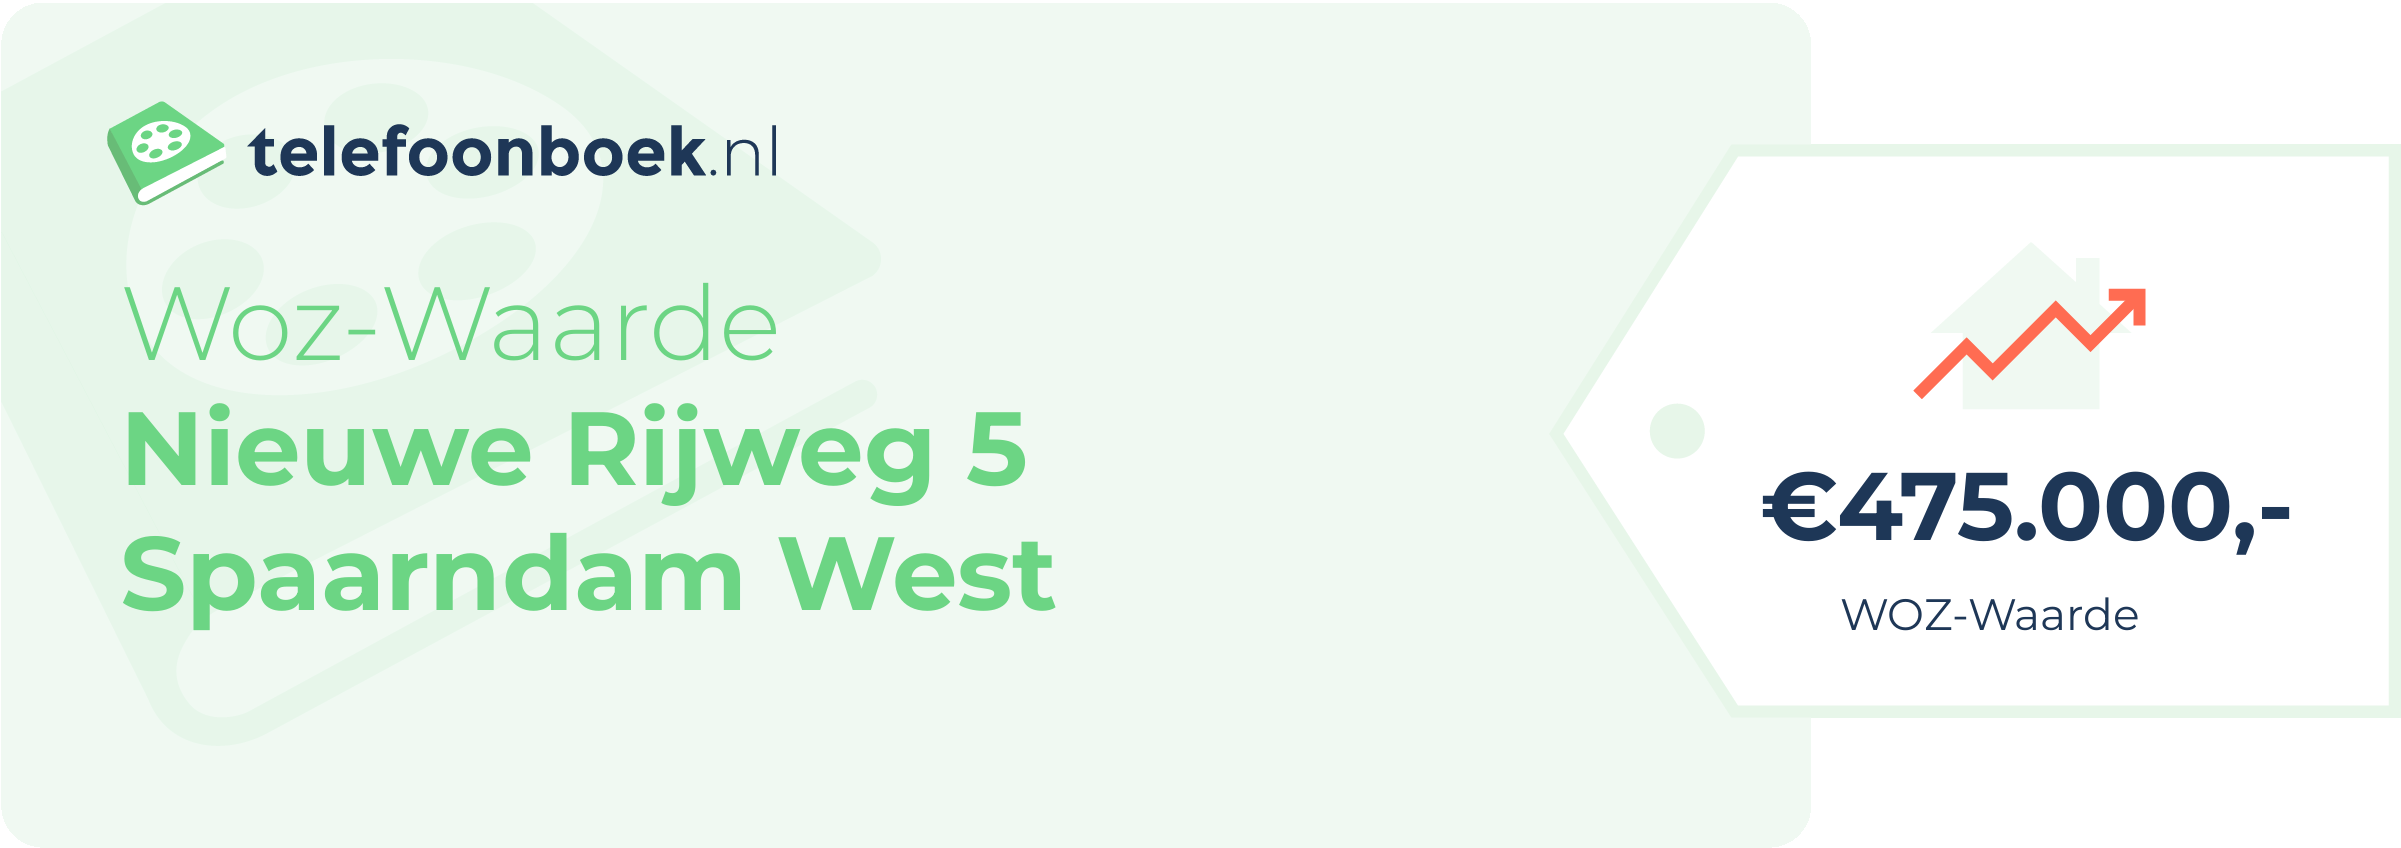 WOZ-waarde Nieuwe Rijweg 5 Spaarndam West